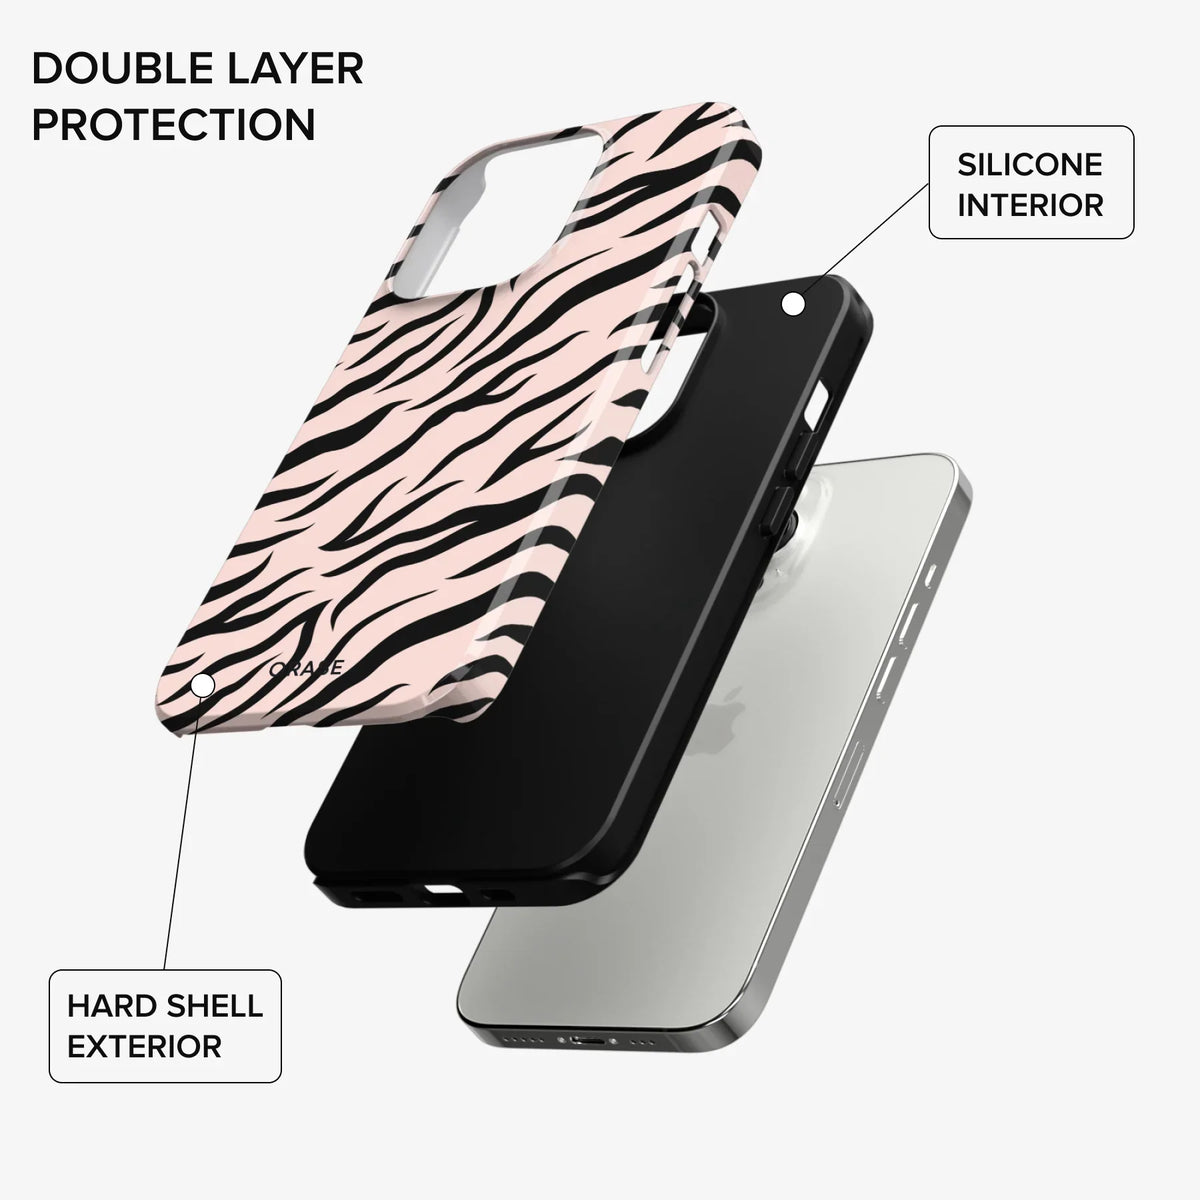 Zebra iPhone Case - iPhone 13 Pro Max